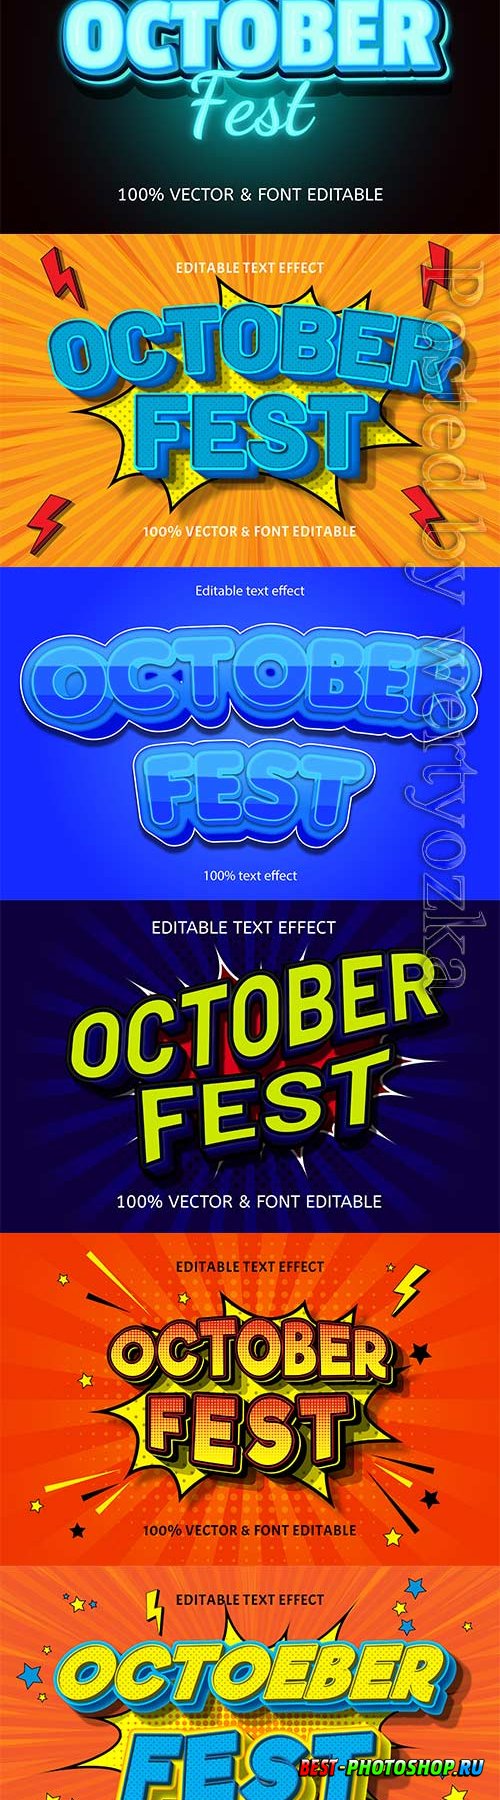 October fest editable text effect vol 11